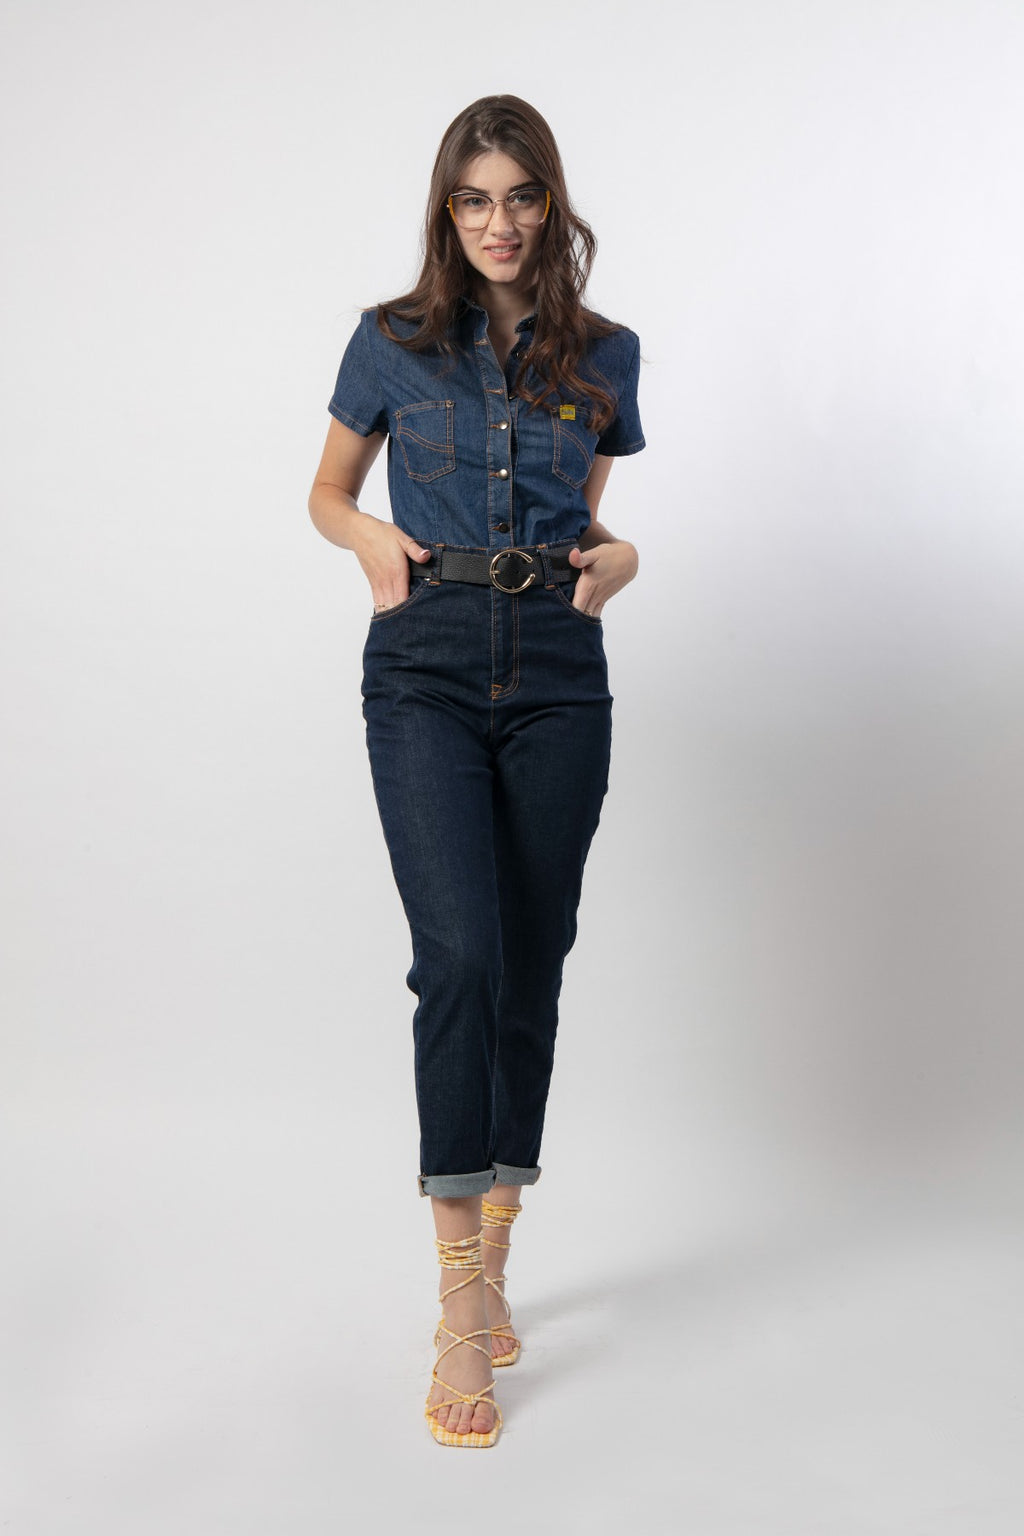 Parpadeo átomo sílaba Camisa Vaquera Manga Corta para Mujer – Bustins Jeans